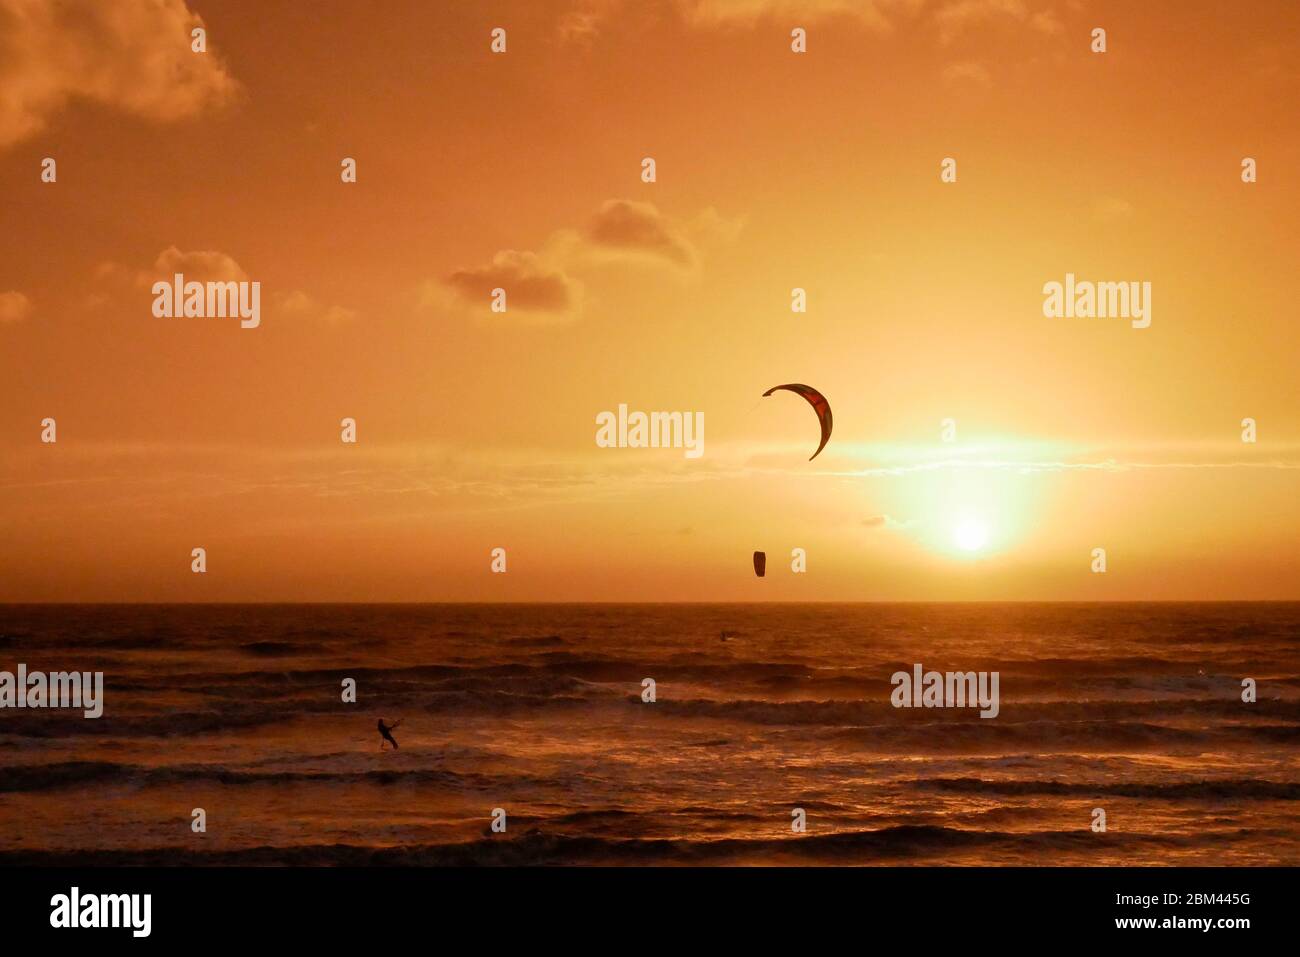 Para surfing at sunset Stock Photo